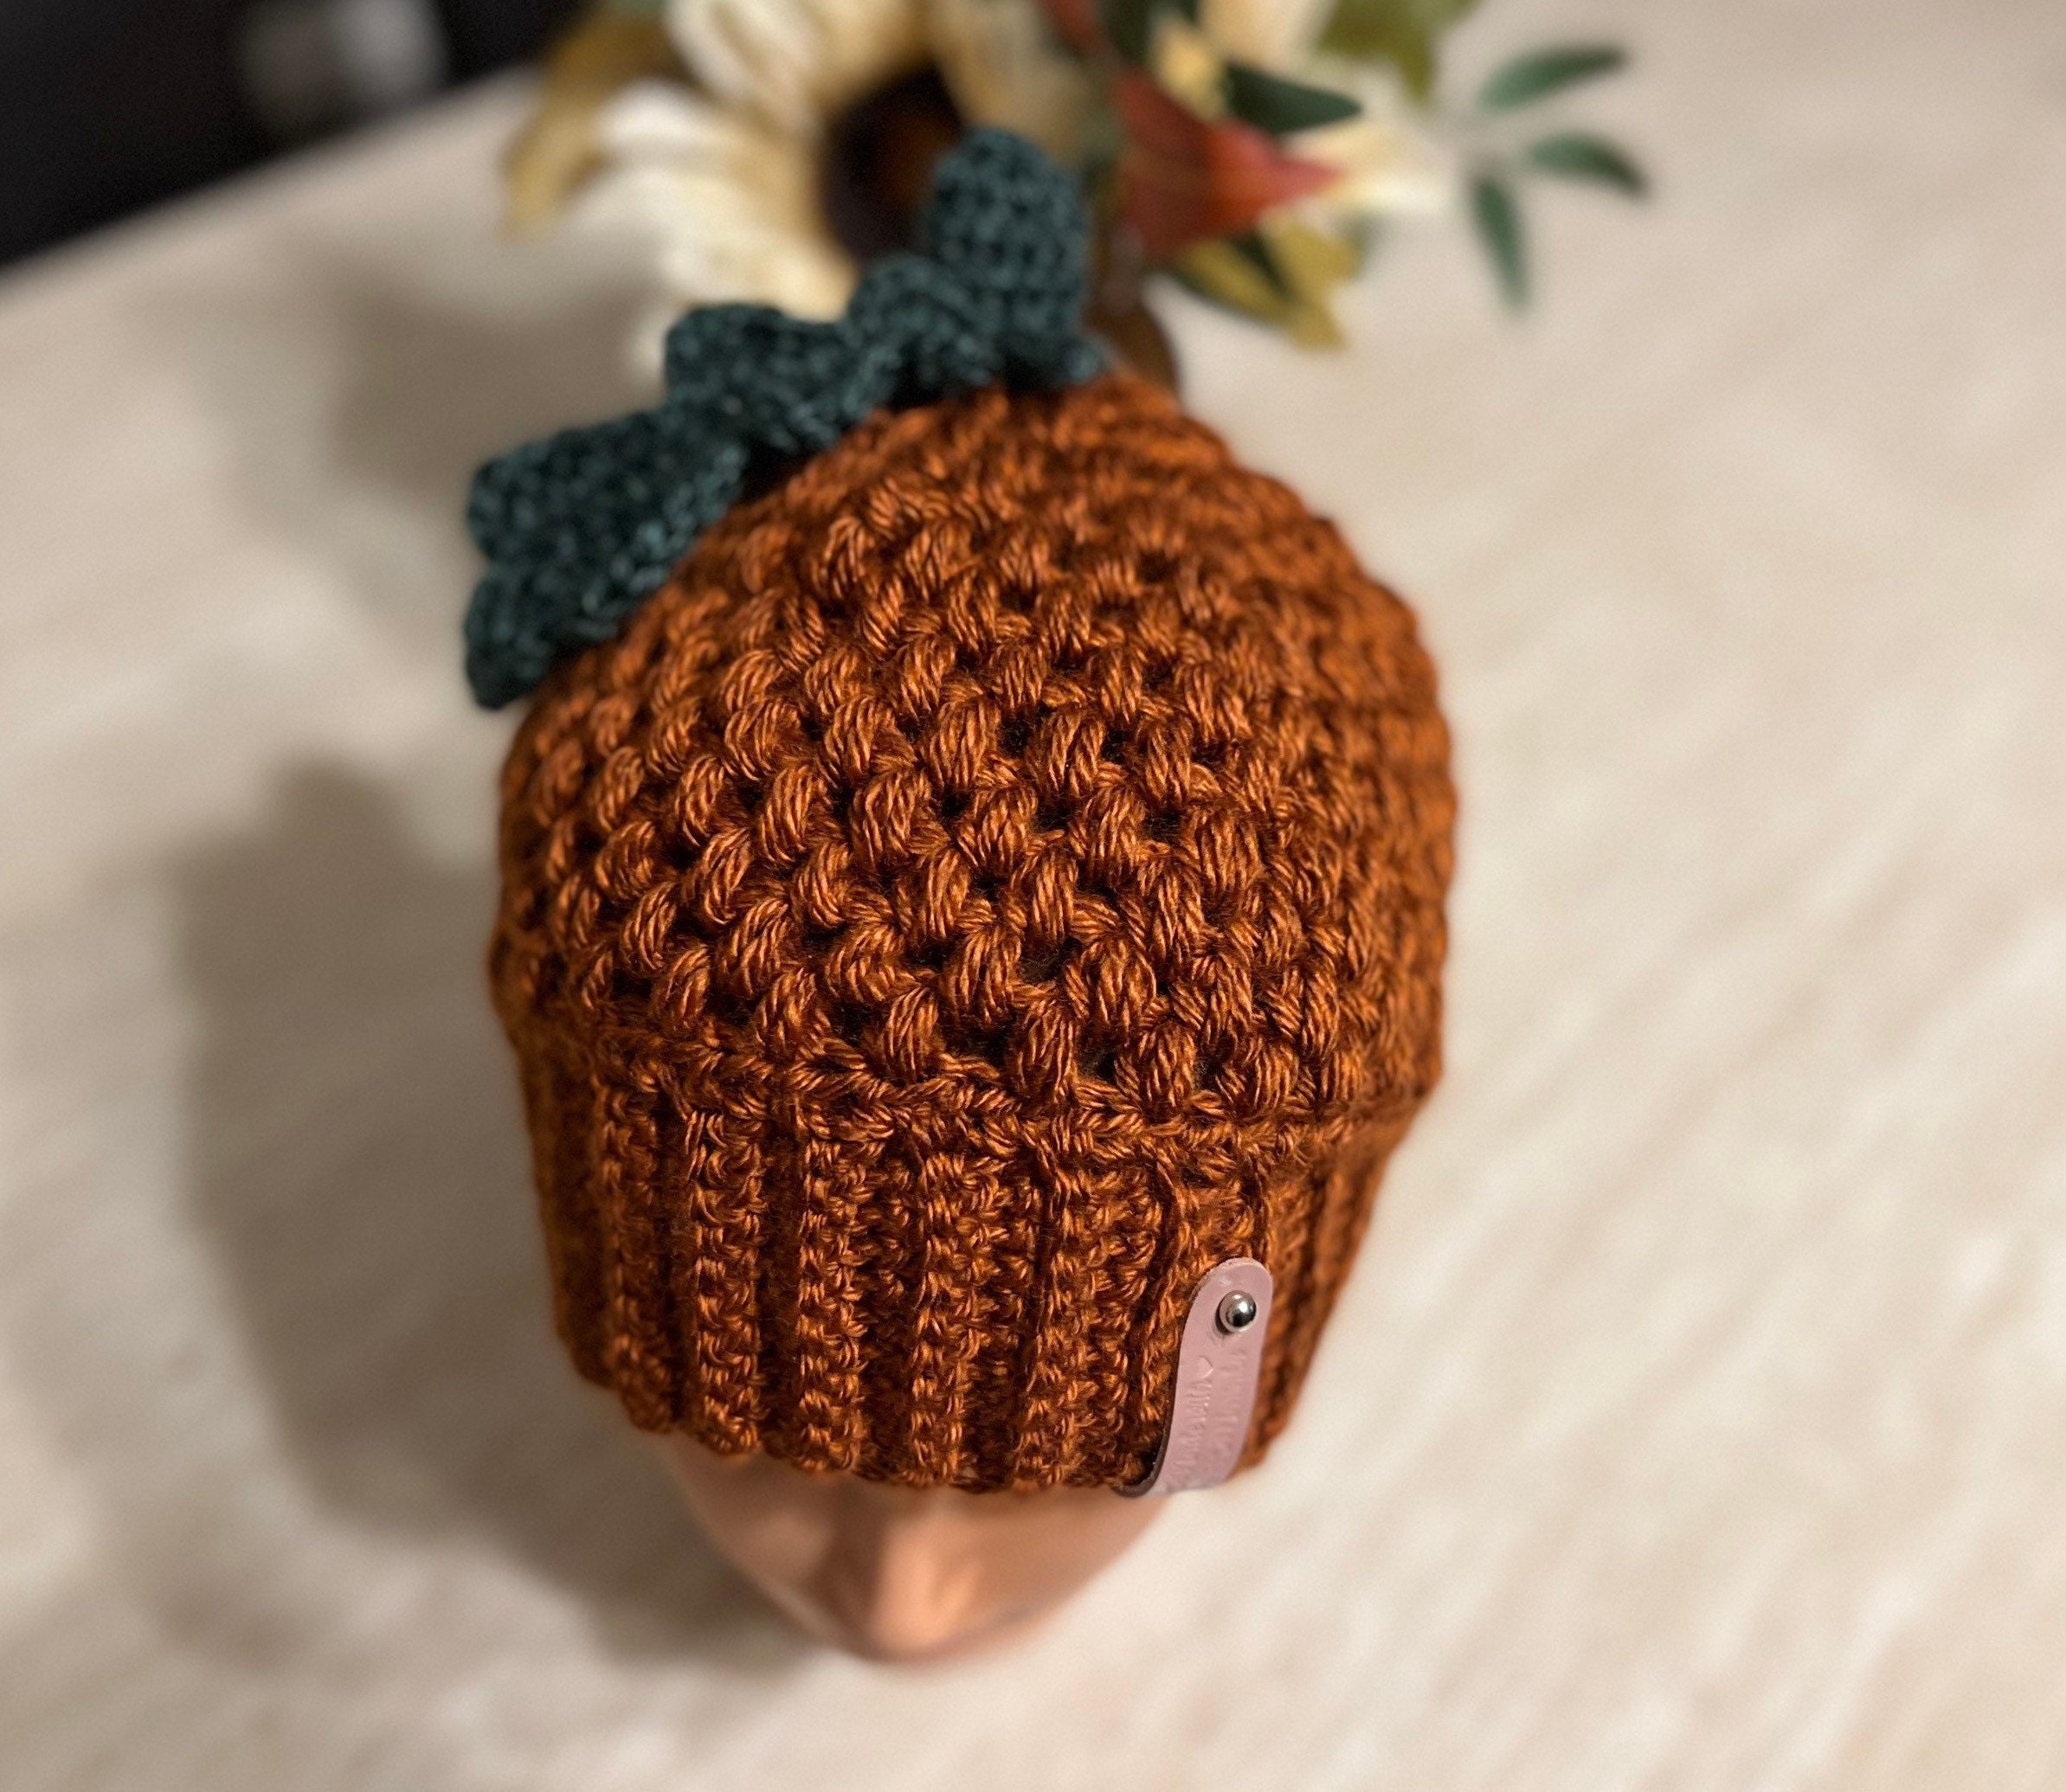 Handmade Crochet Hat, Adult size, Light Sage Green Color